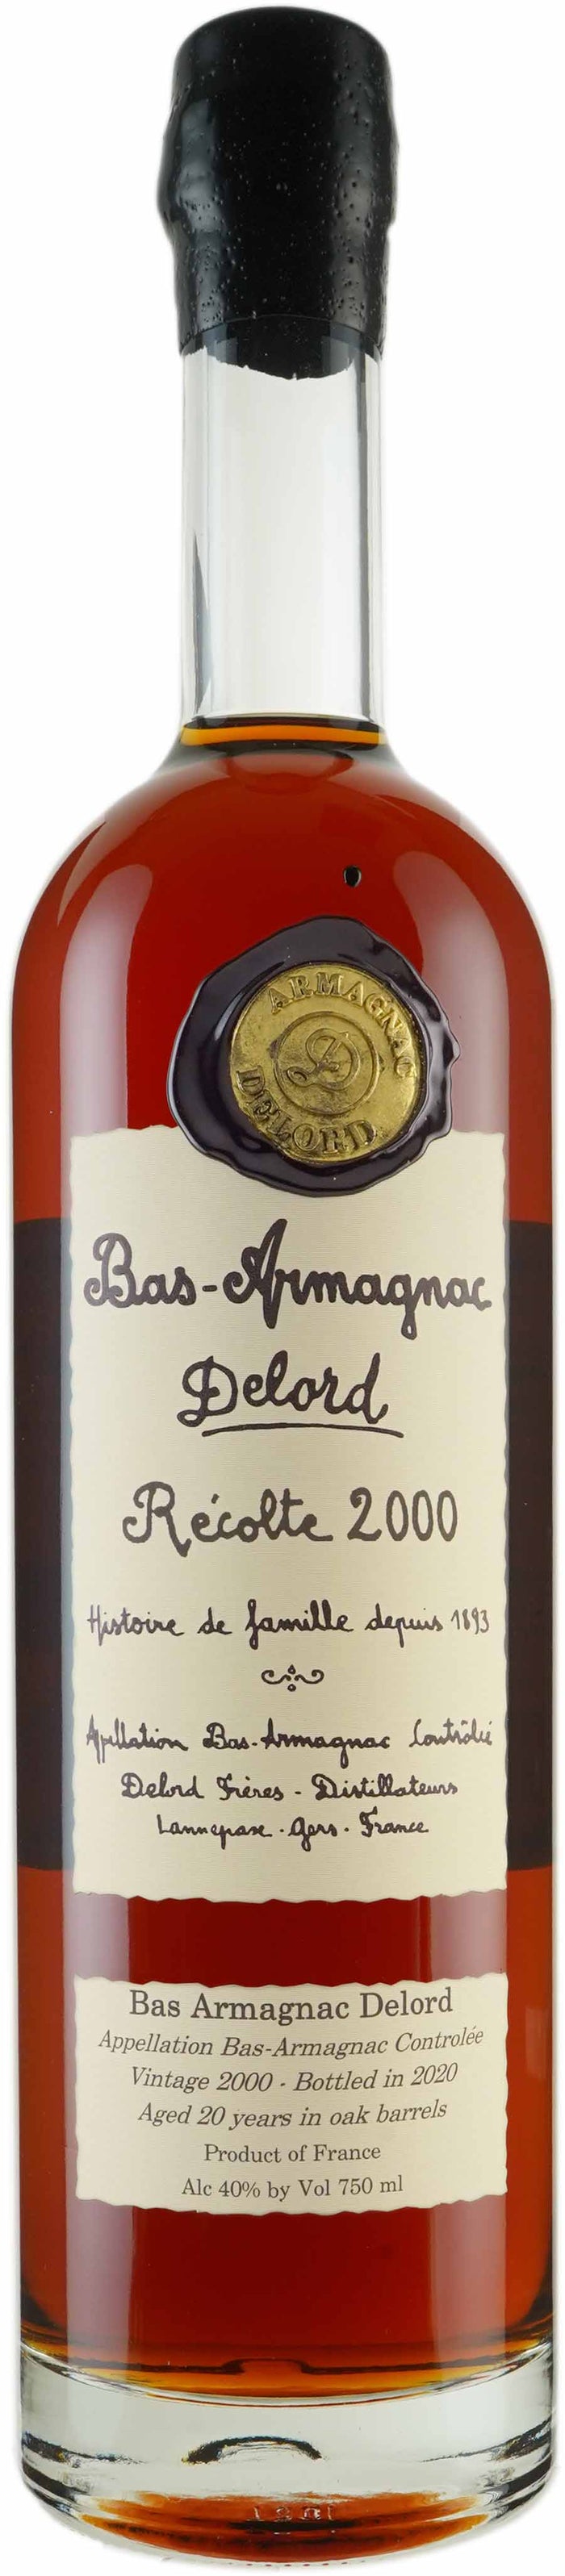 Delord 20 year old Vintage 2000 Armagnac